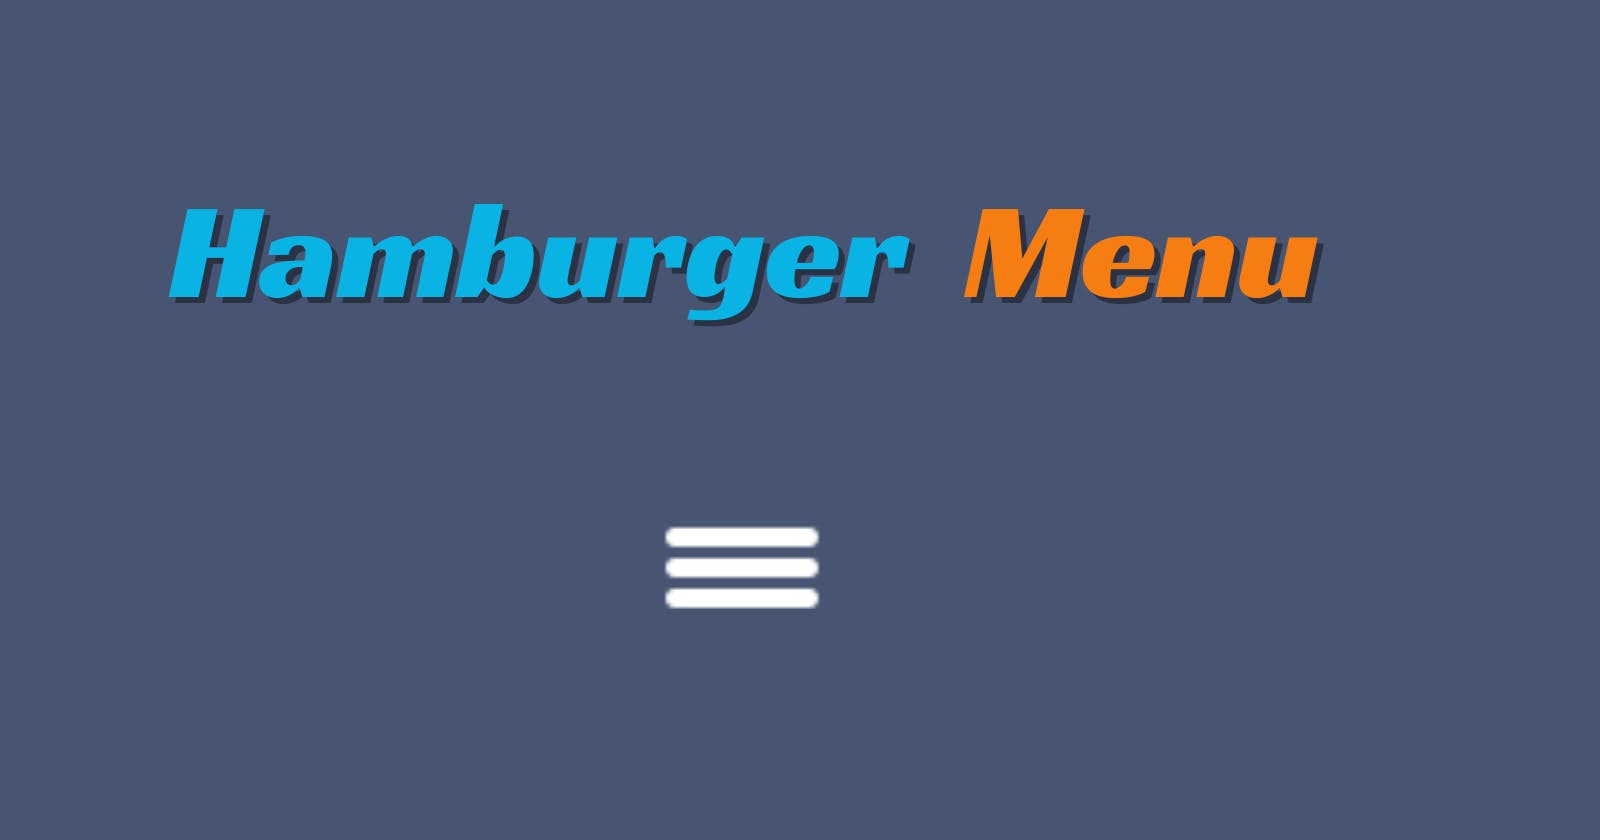 Building a Hamburger Menu with HTML, CSS, and JavaScript